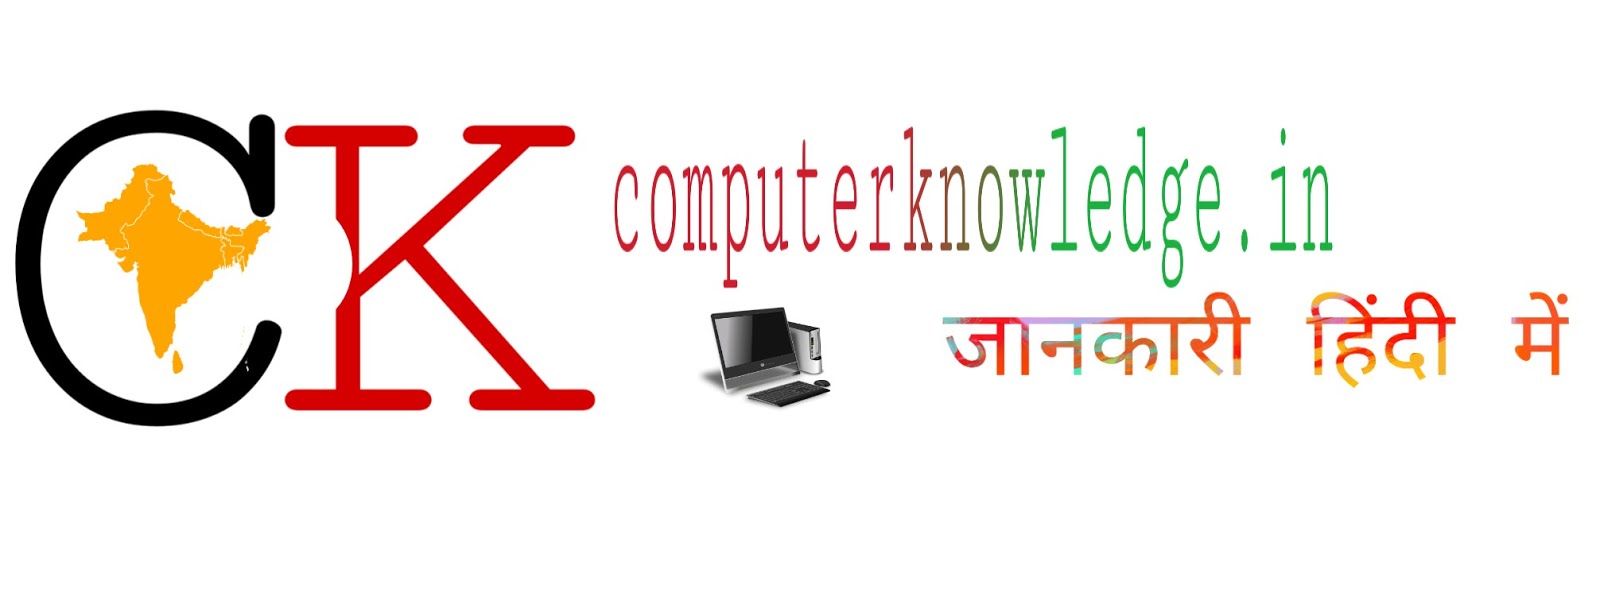 Computer knowledge 